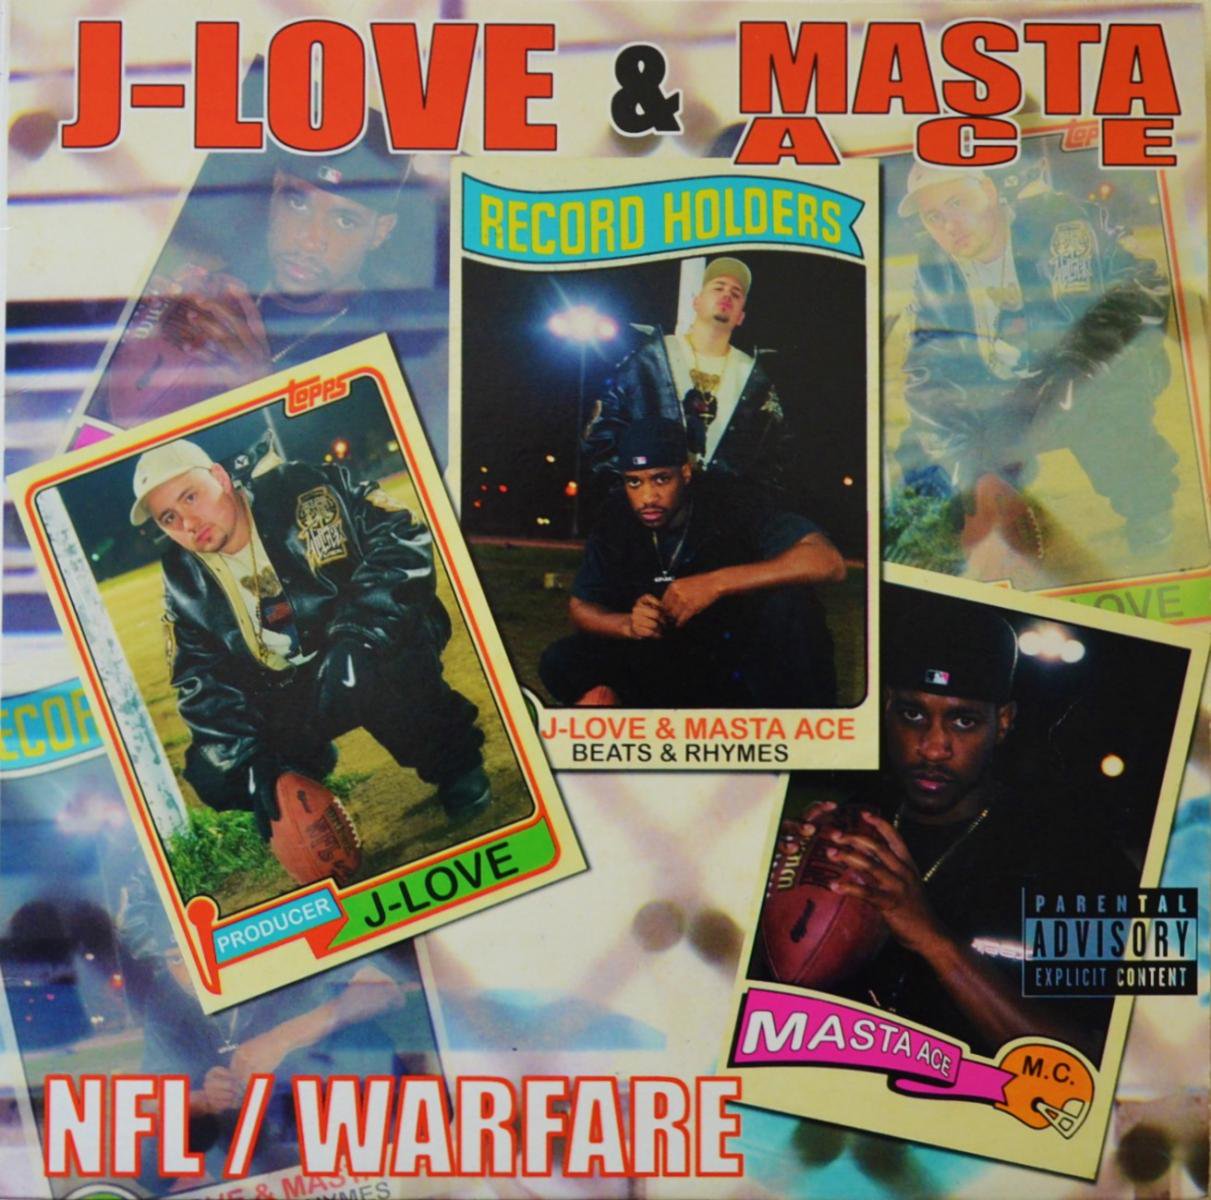 J-LOVE & MASTA ACE / NFL / WARFARE (12